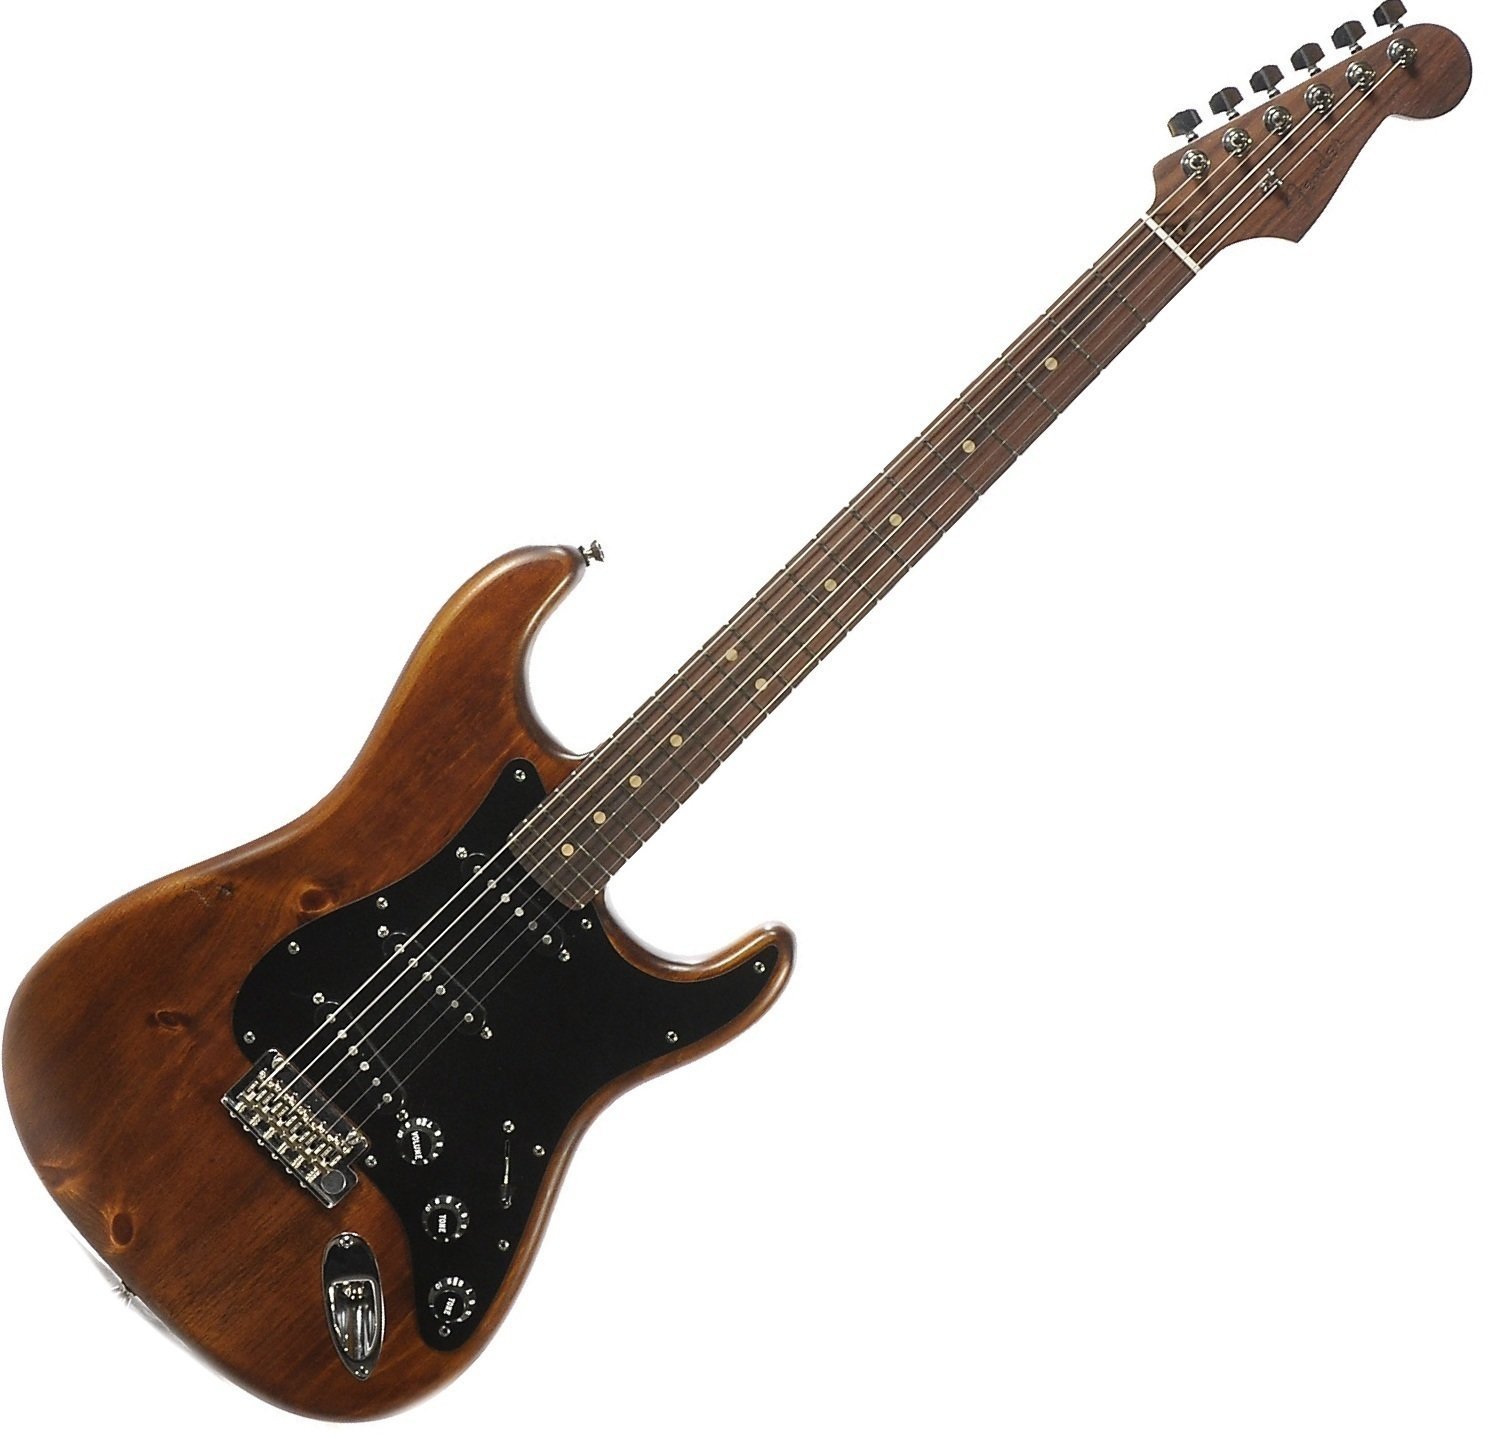 Sähkökitara Fender Reclaimed Eastern Pine Stratocaster